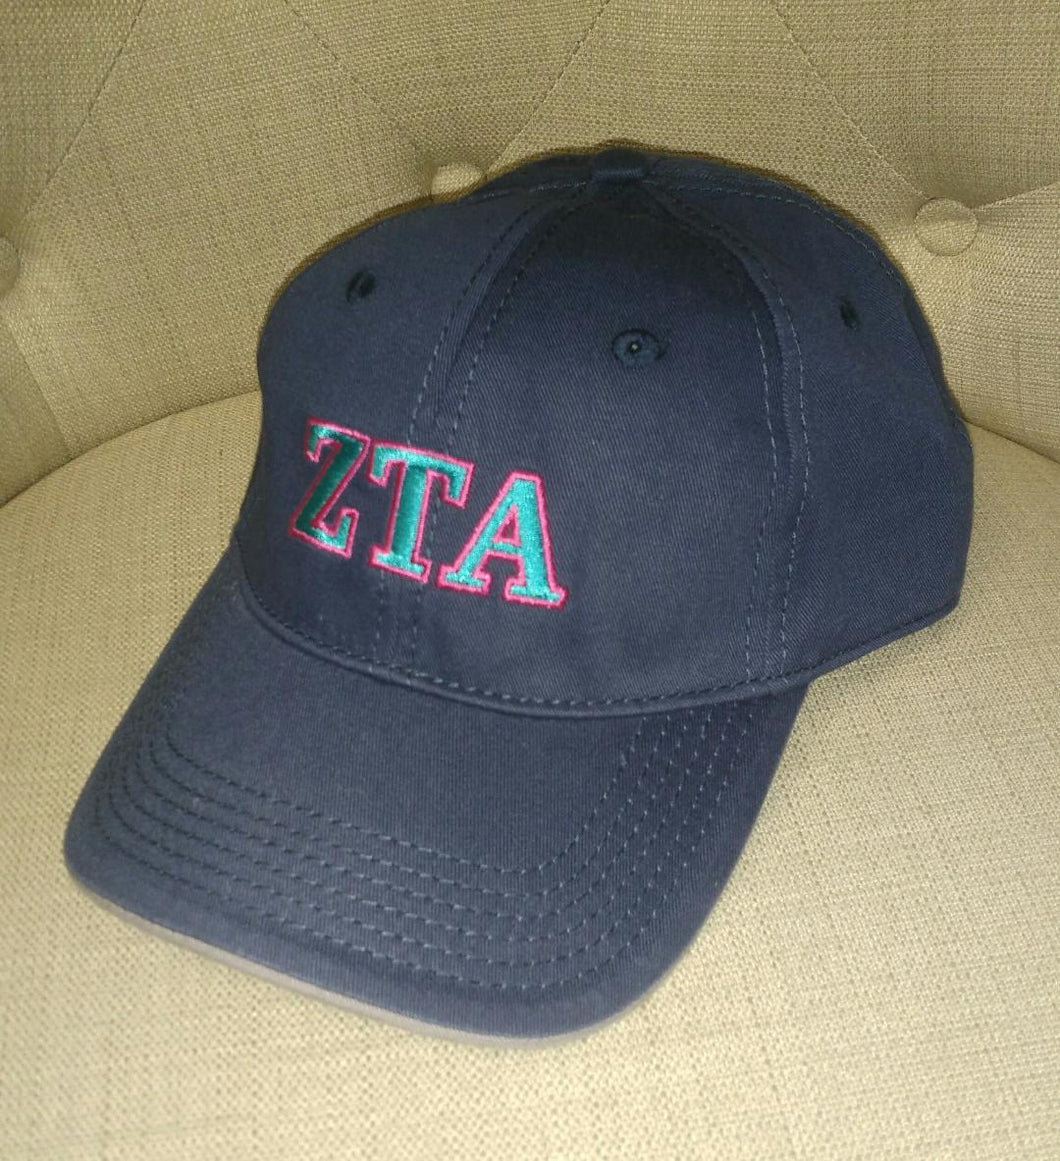 Navy Embroidered Cap - Zeta Tau Alpha